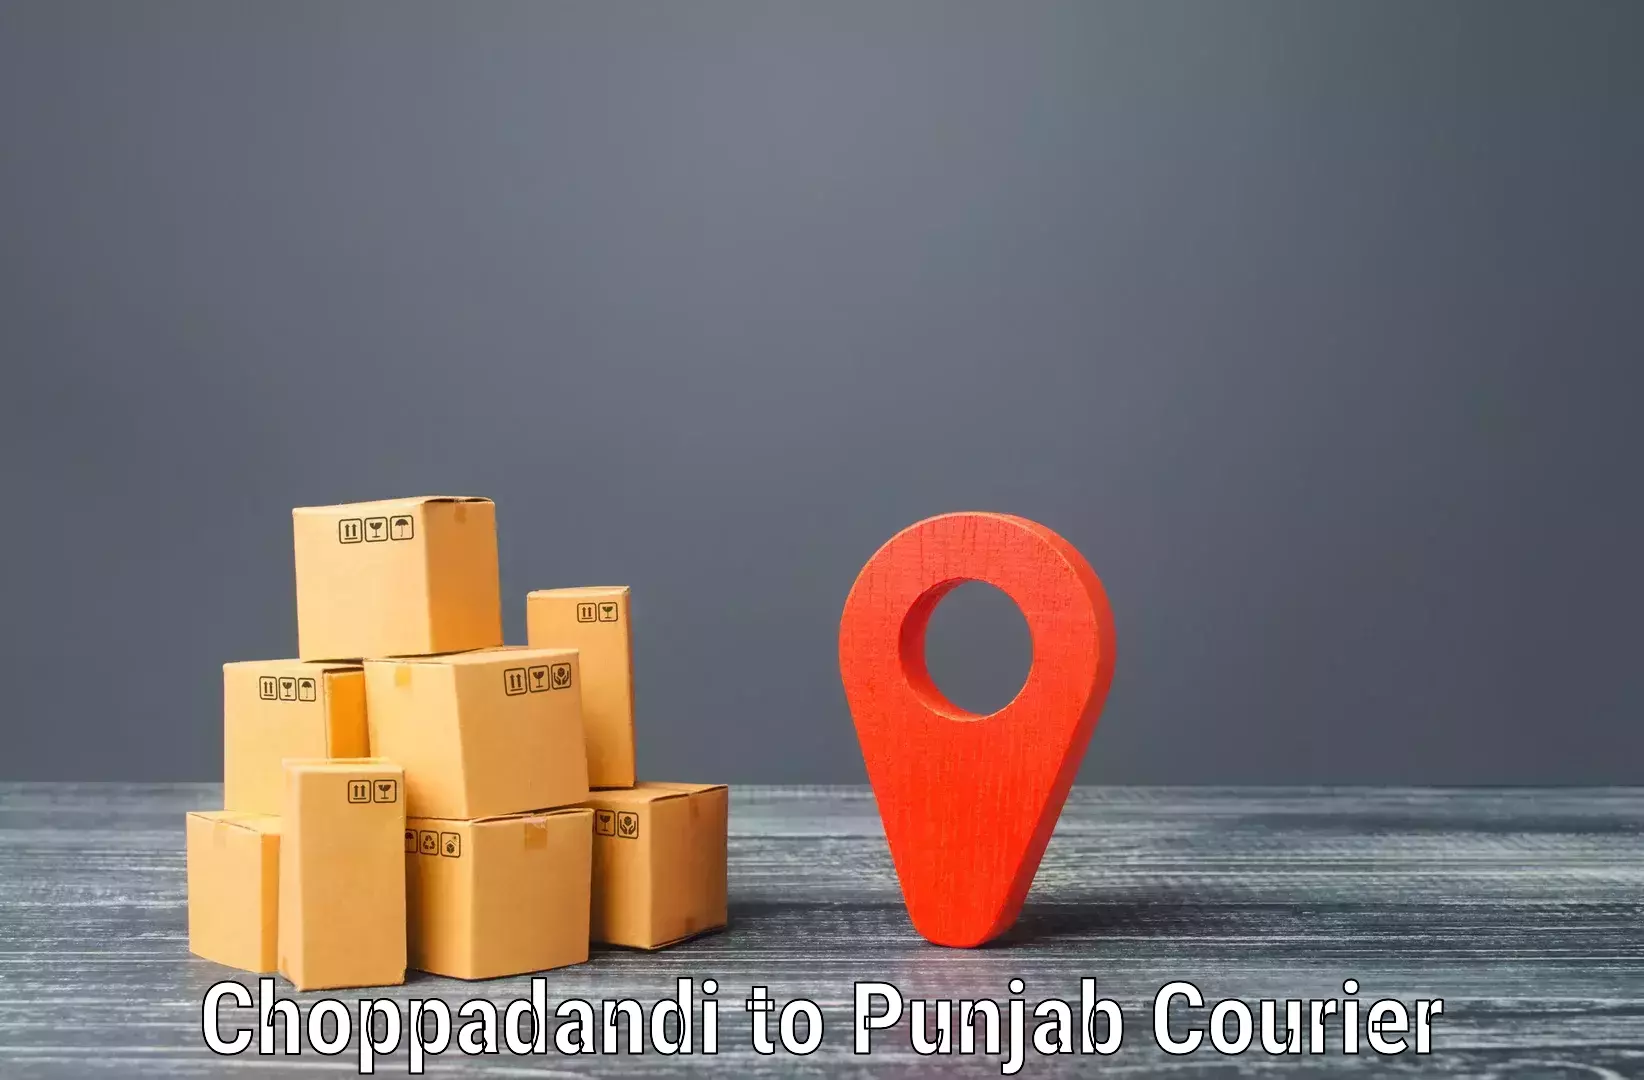 Courier app Choppadandi to Mohali